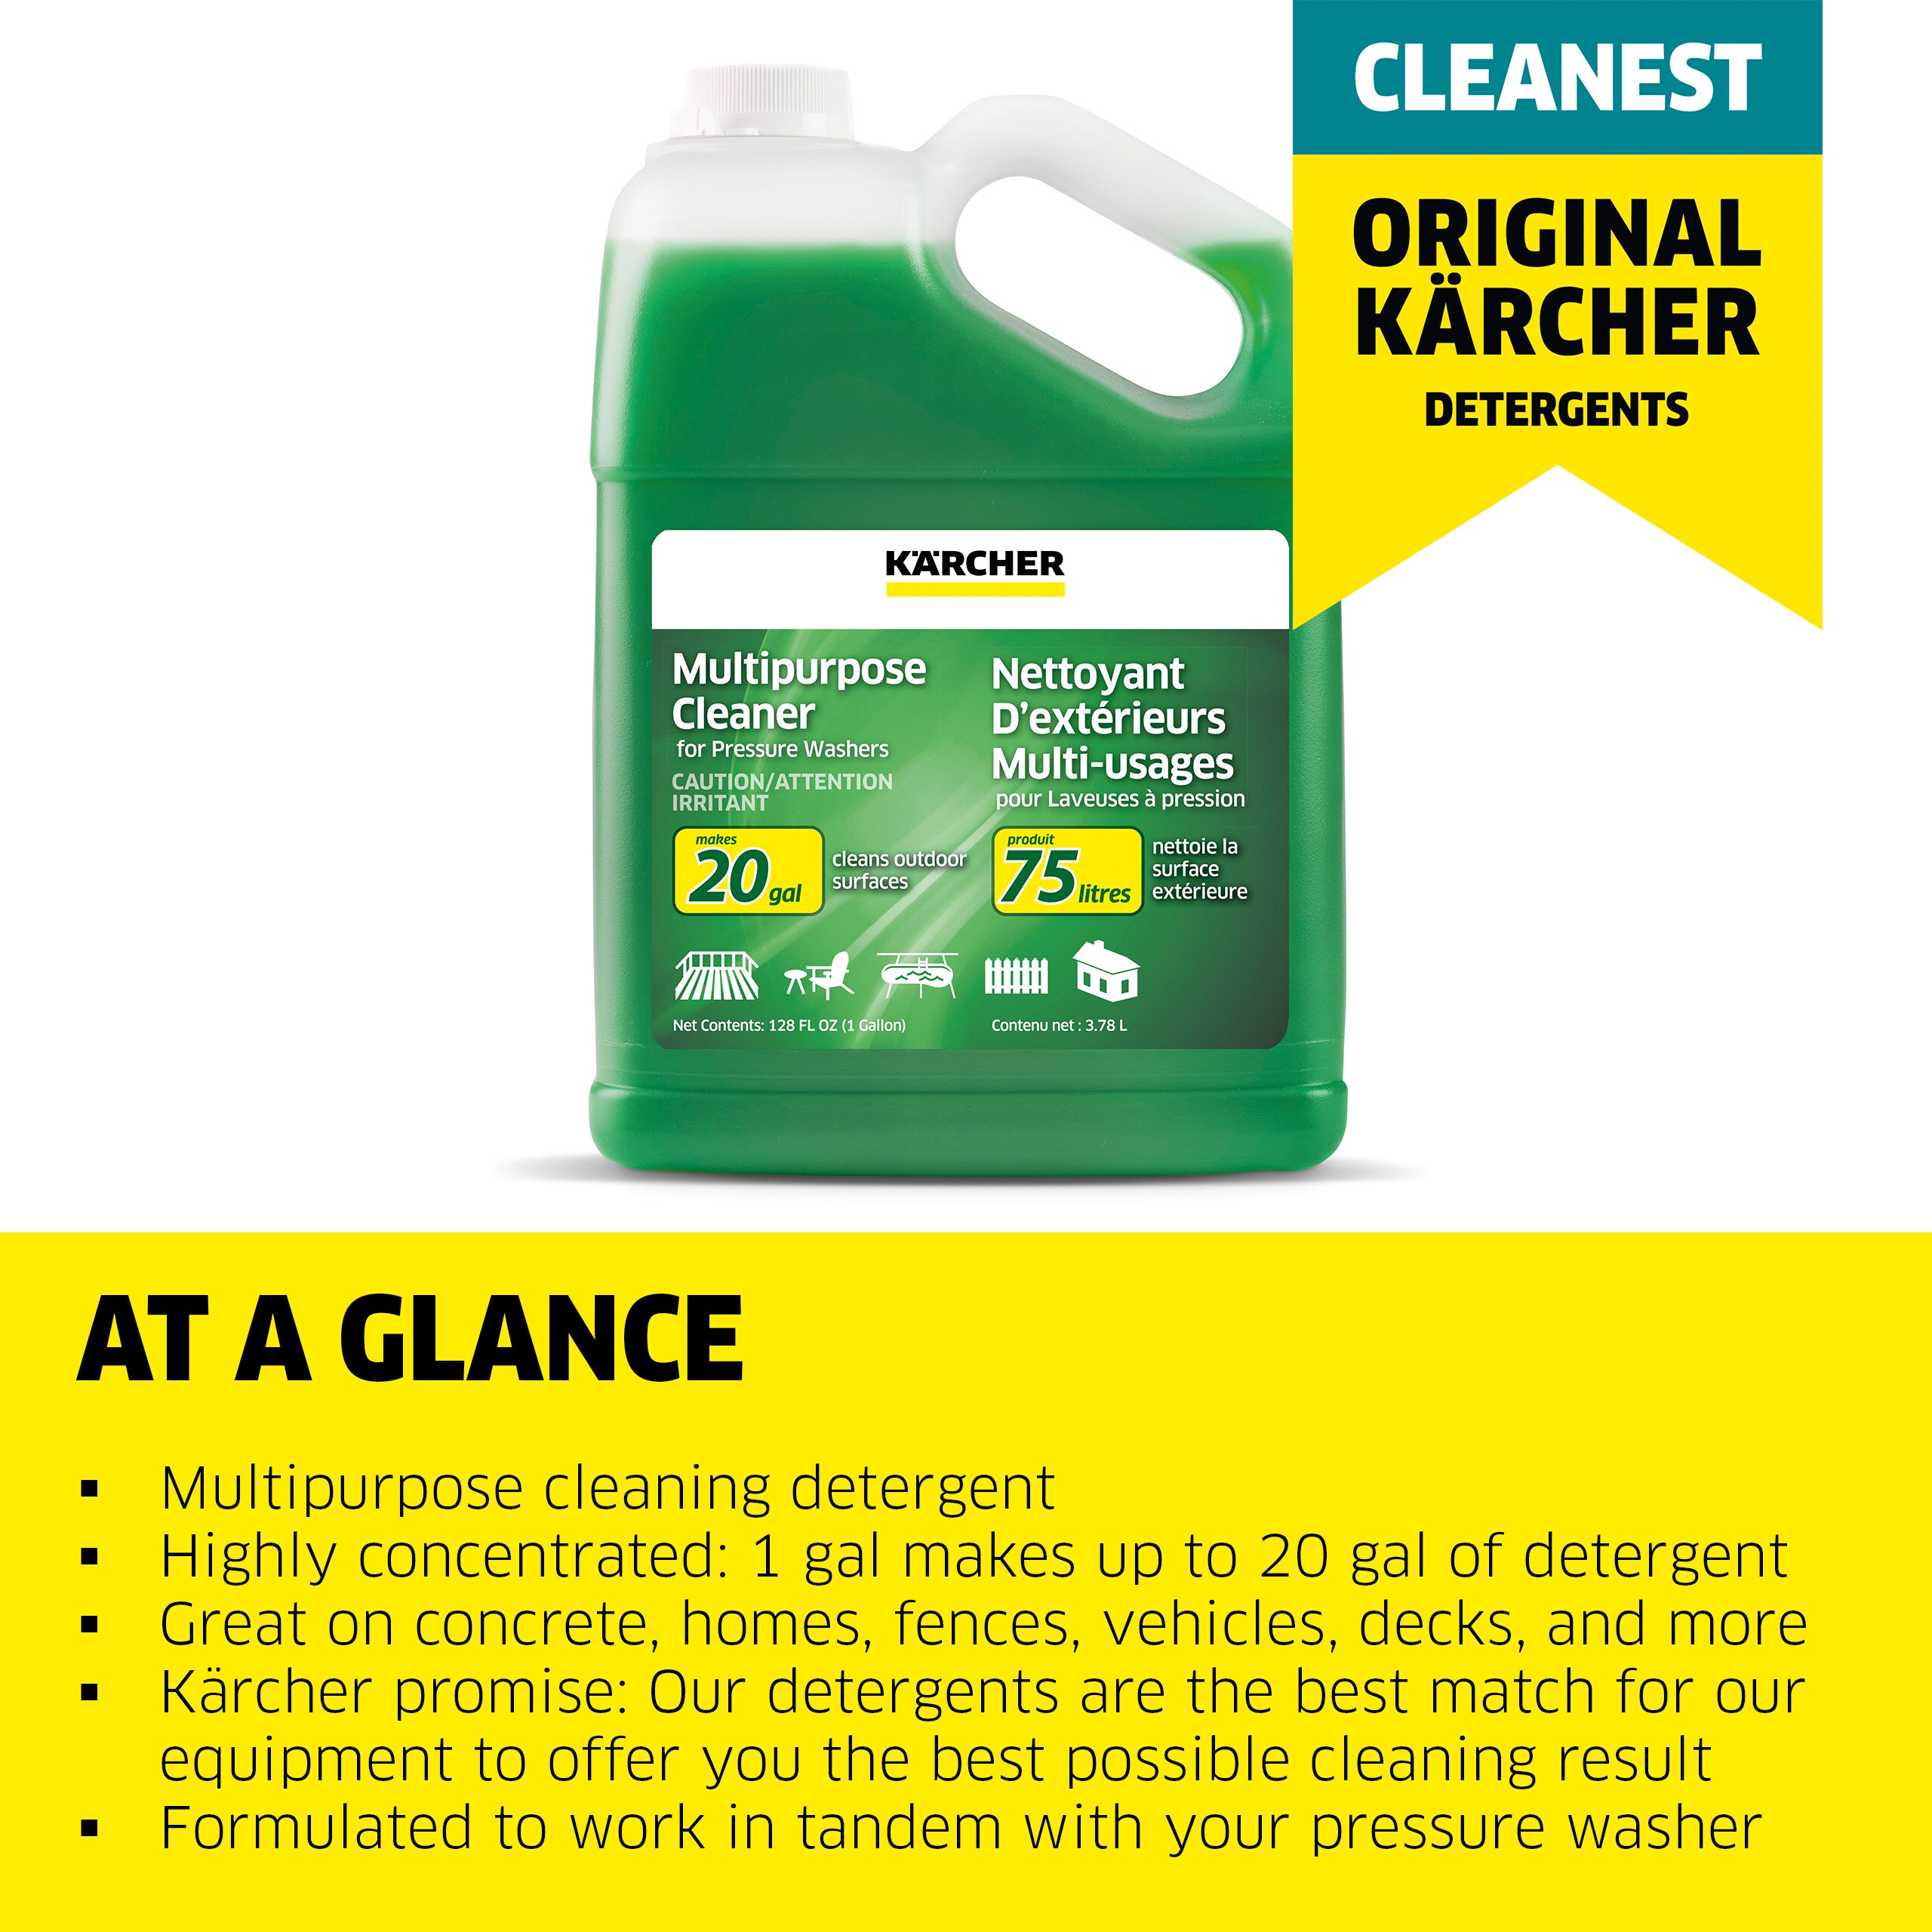 Karcher K5 Premium Electric Power Pressure Washer, 2000 PSI, 1.4 GPM &  Multi-Purpose Cleaning Pressure Power Washer Detergent Soap, 1 Gallon